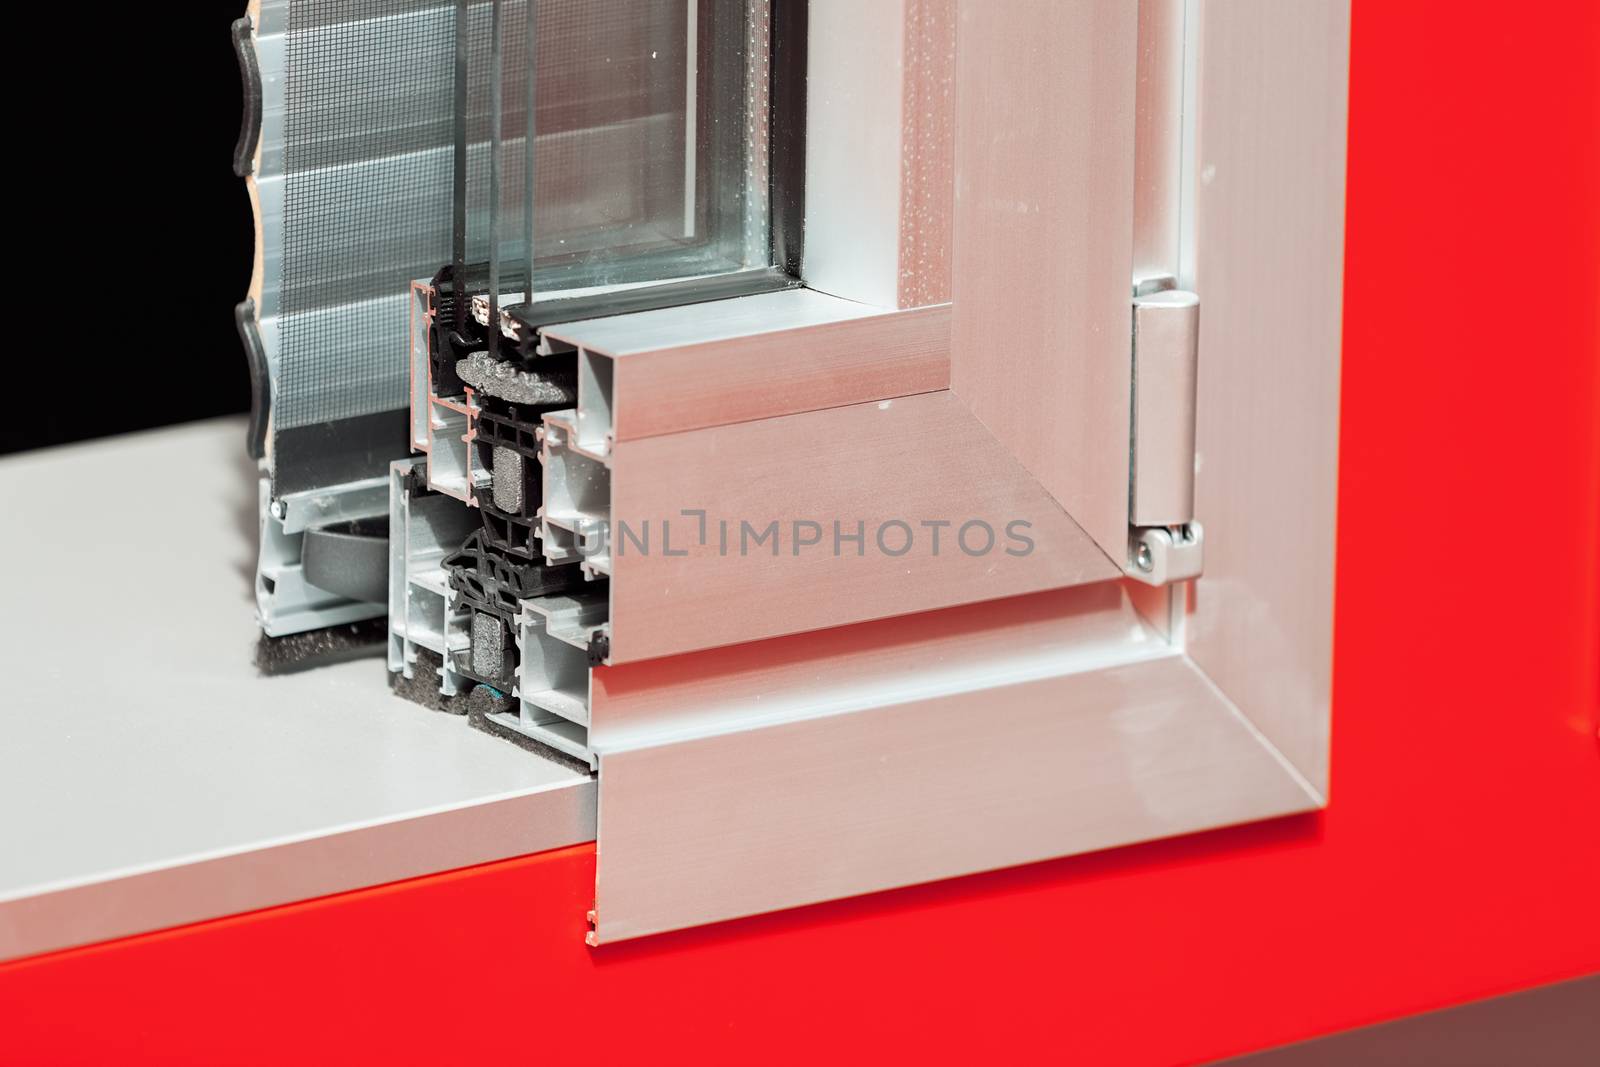  aluminum window frames with shutters by vladimirnenezic